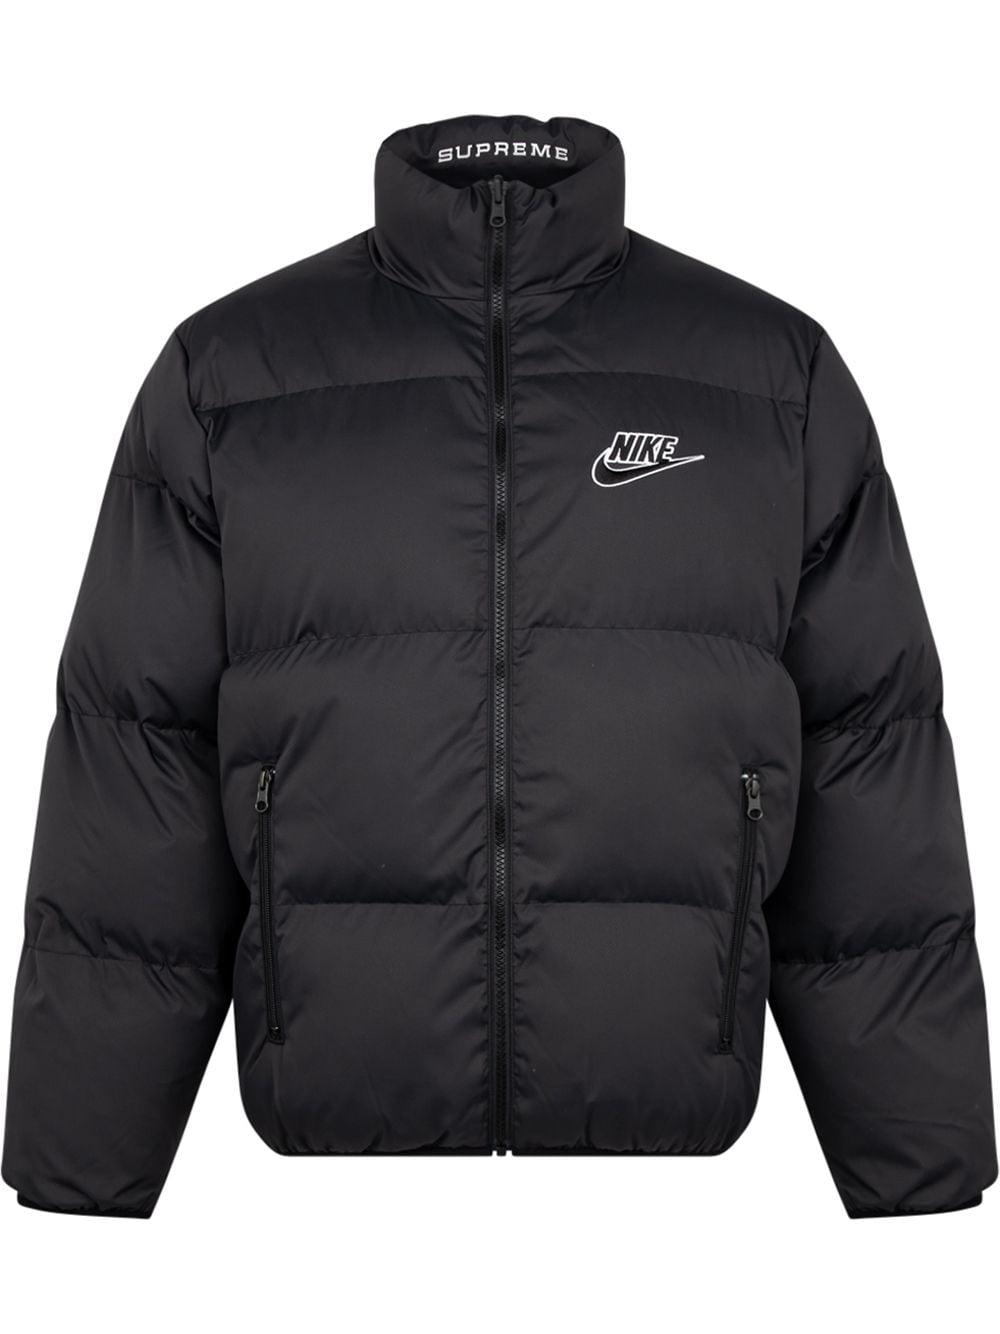 Supreme X Nike Reversible Puffy Jacket in Black - Lyst